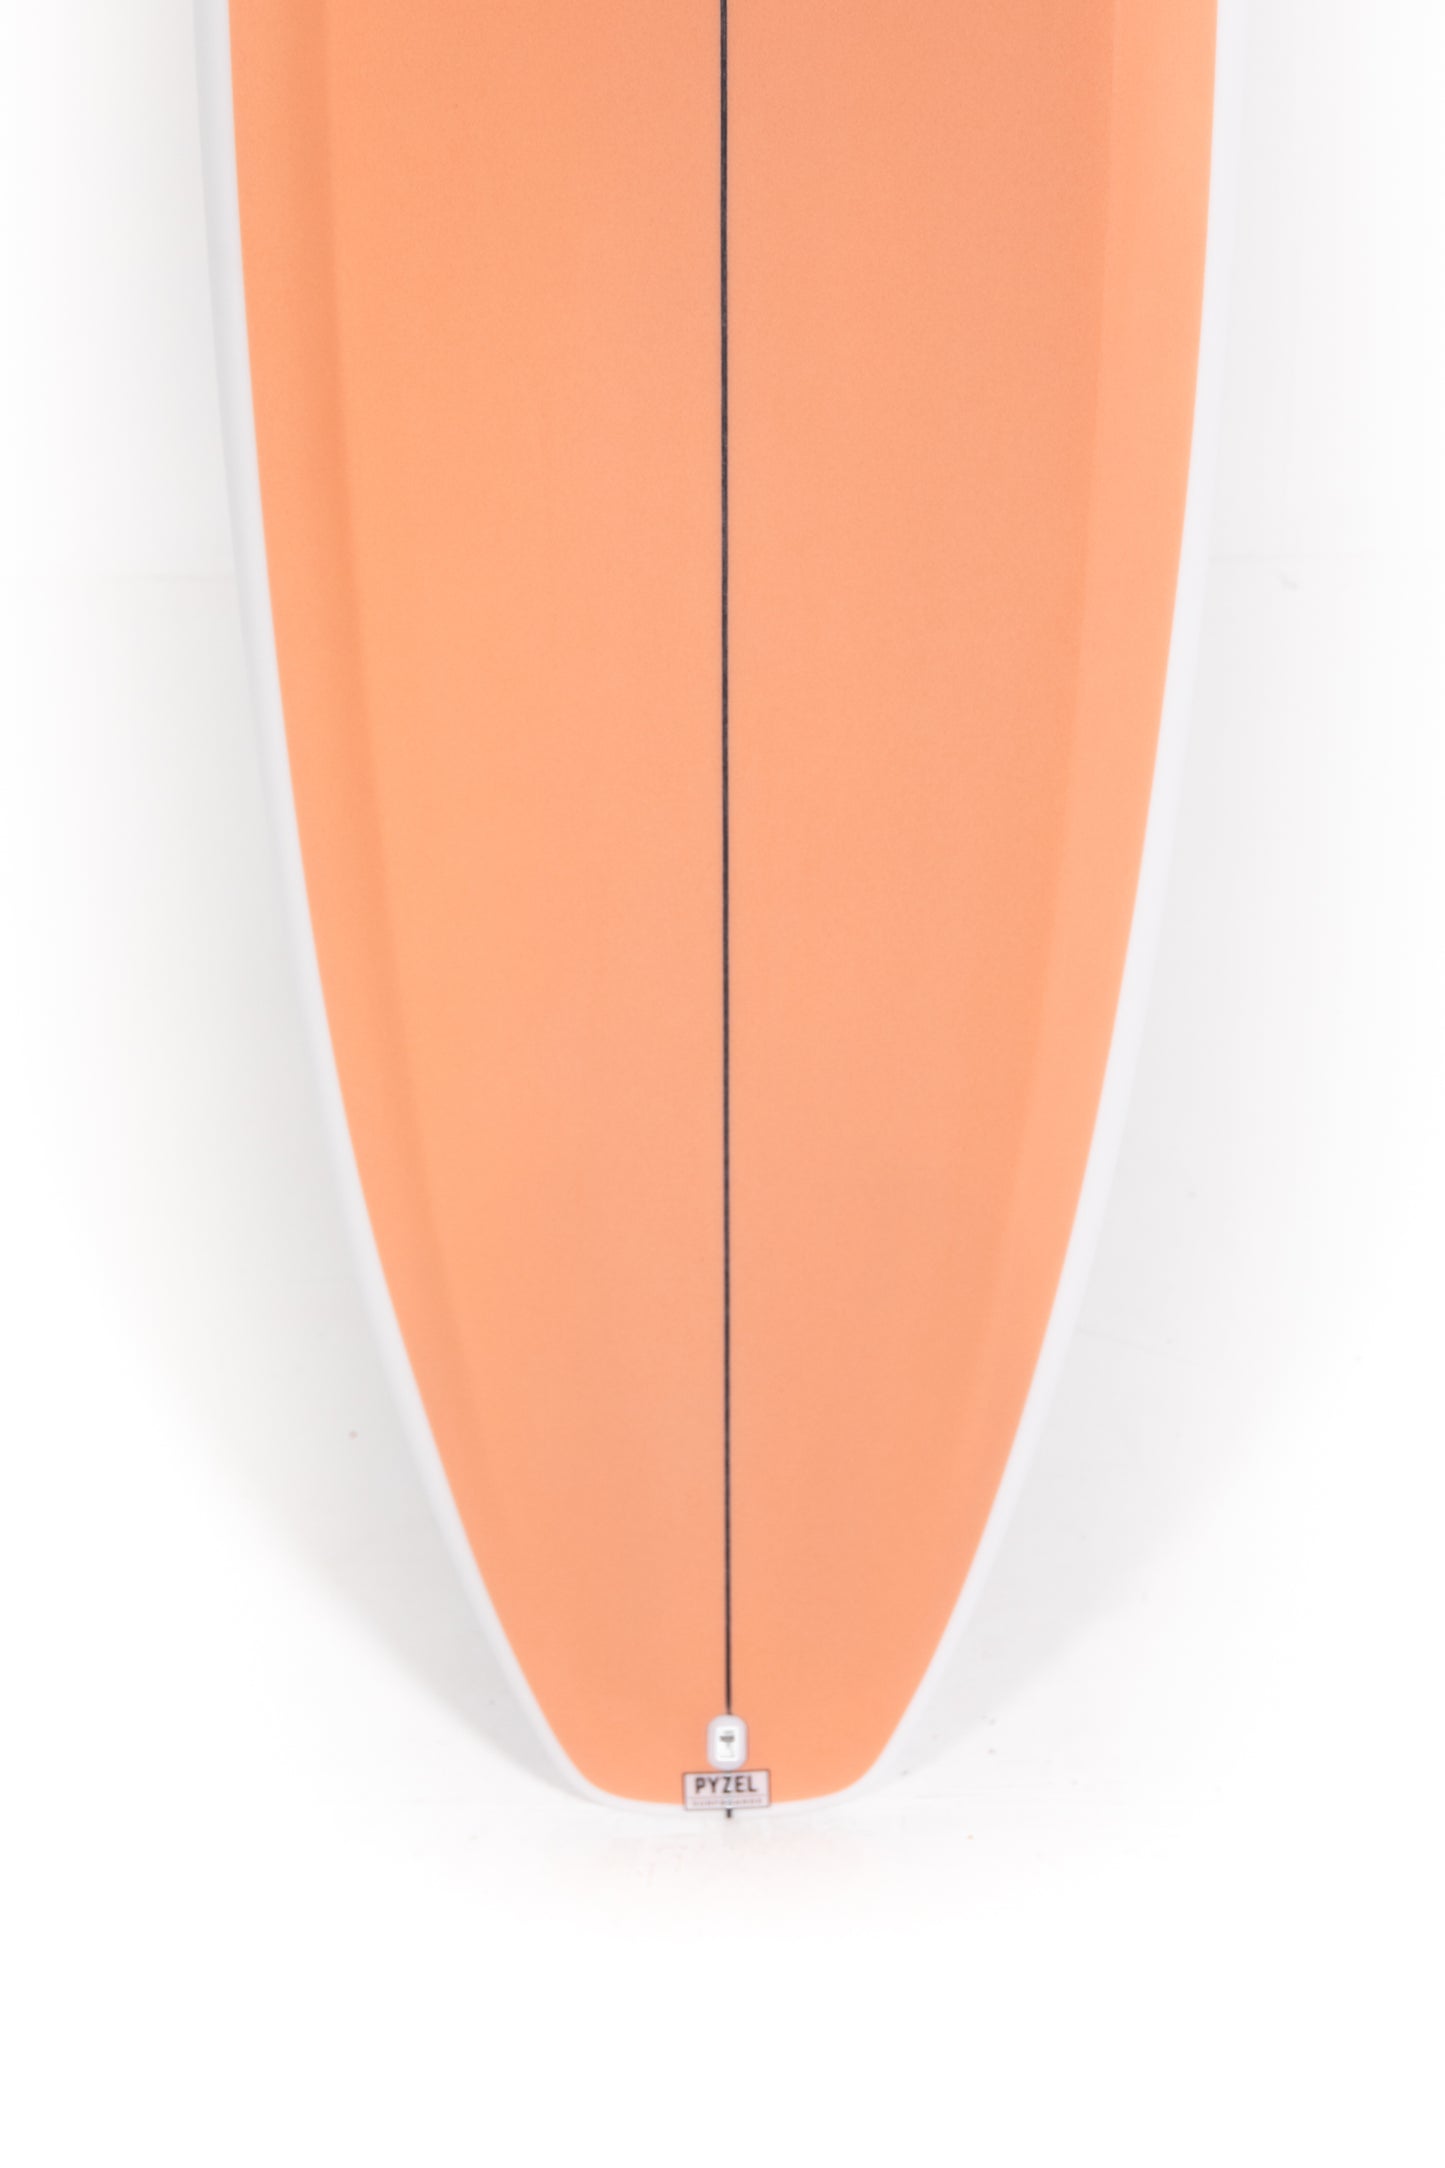 
                  
                    Pukas-Surf-Shop-Pyzel-Surfboards-Precious-Jon-Pyzel-5_11
                  
                